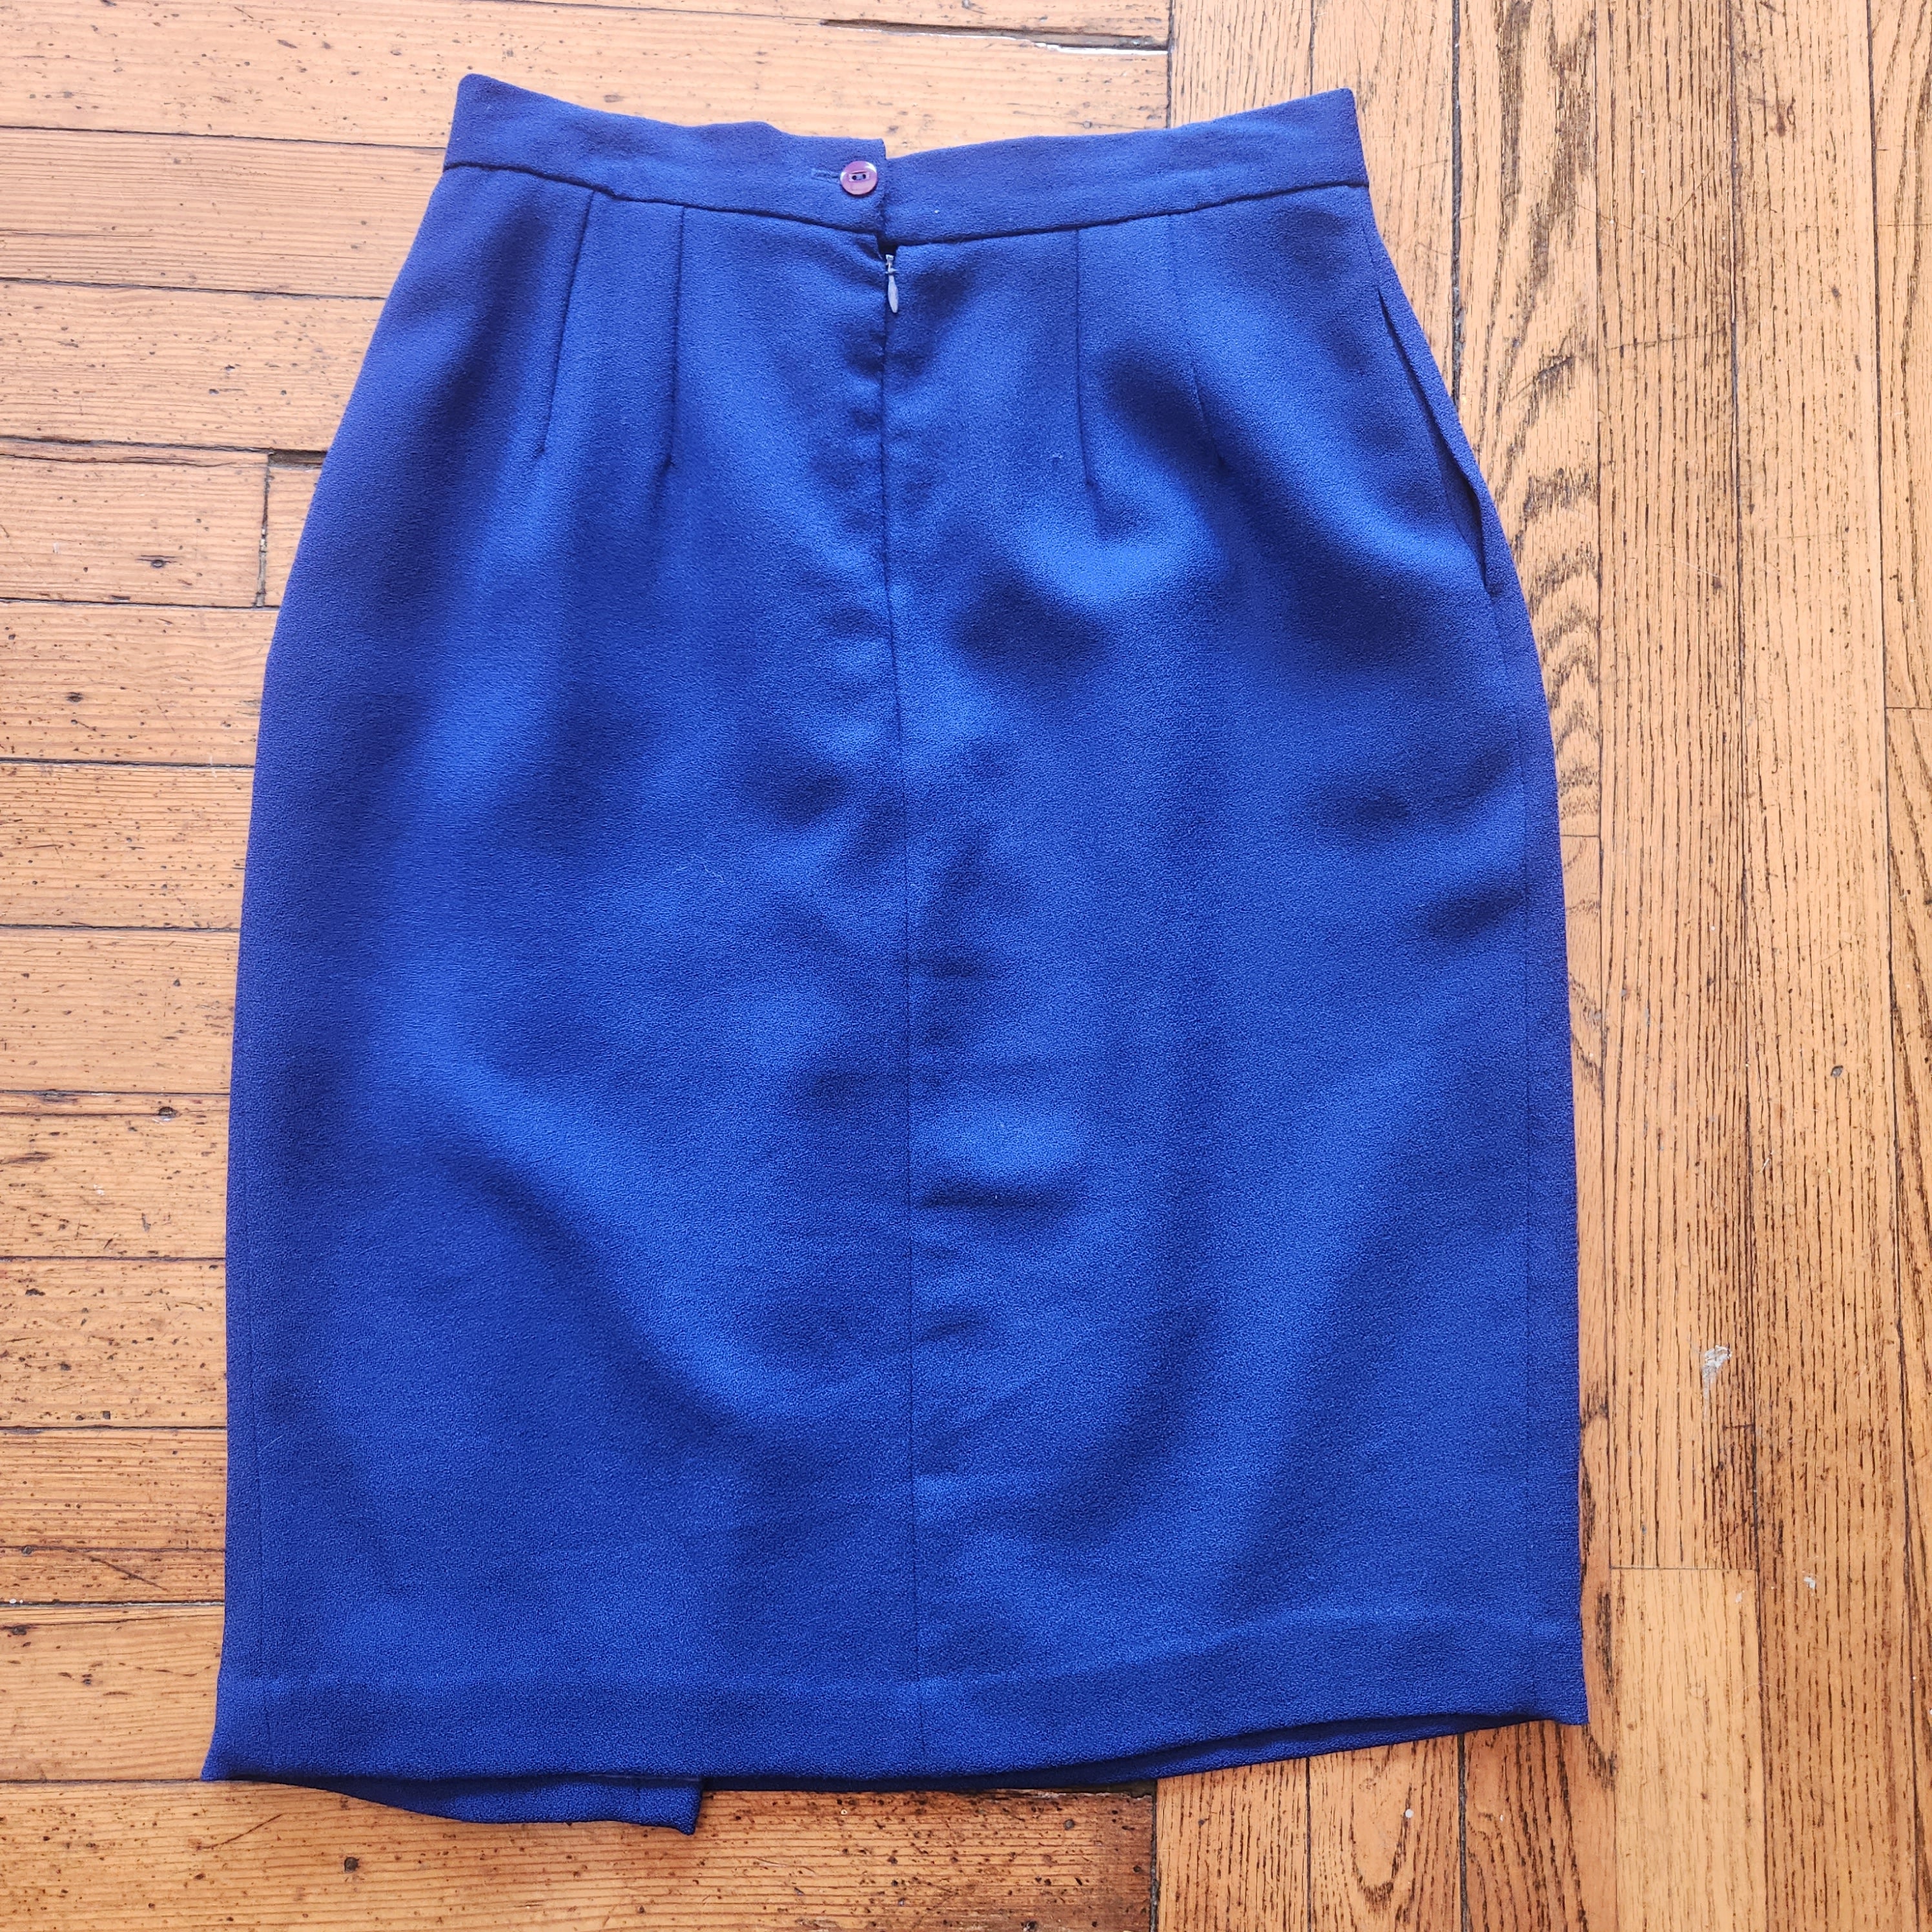 Pappagallo Vintage Cobalt Blue Wool Pencil Skirt Size 8